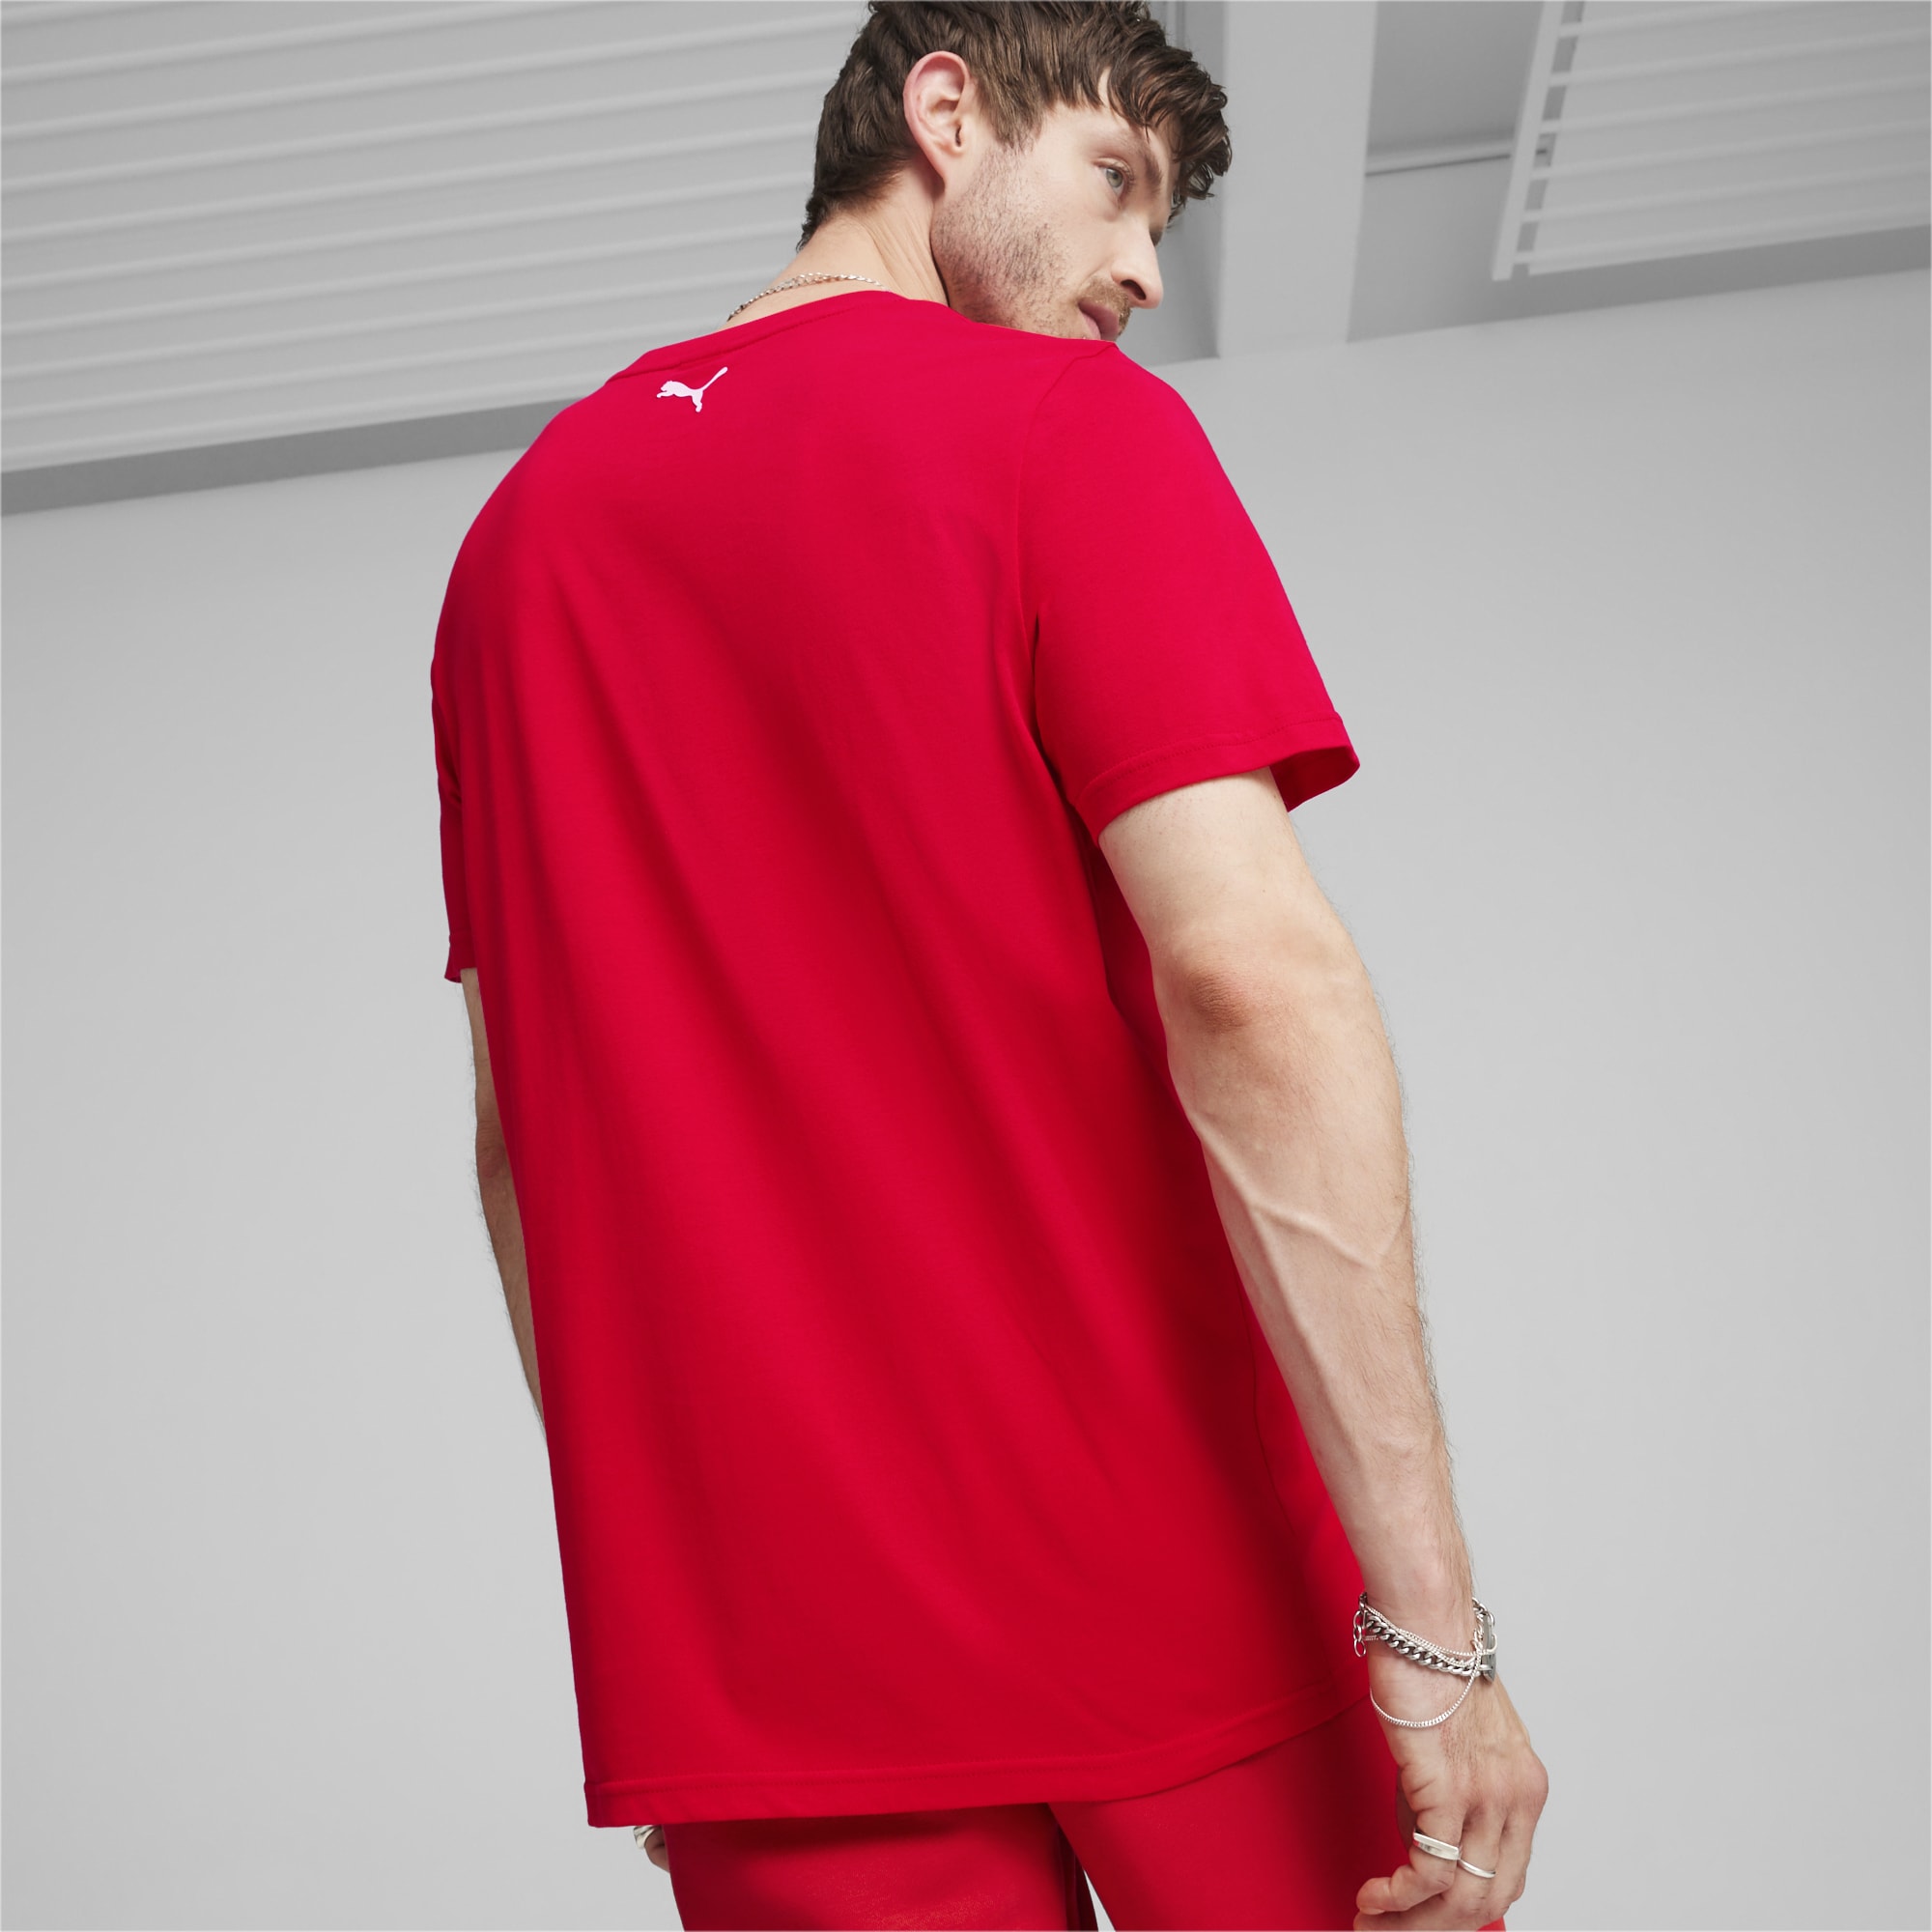 PUMA Scuderia Ferrari Race Big Shield Men's Motorsport Heritage T-Shirt, Red, Size XS, Clothing